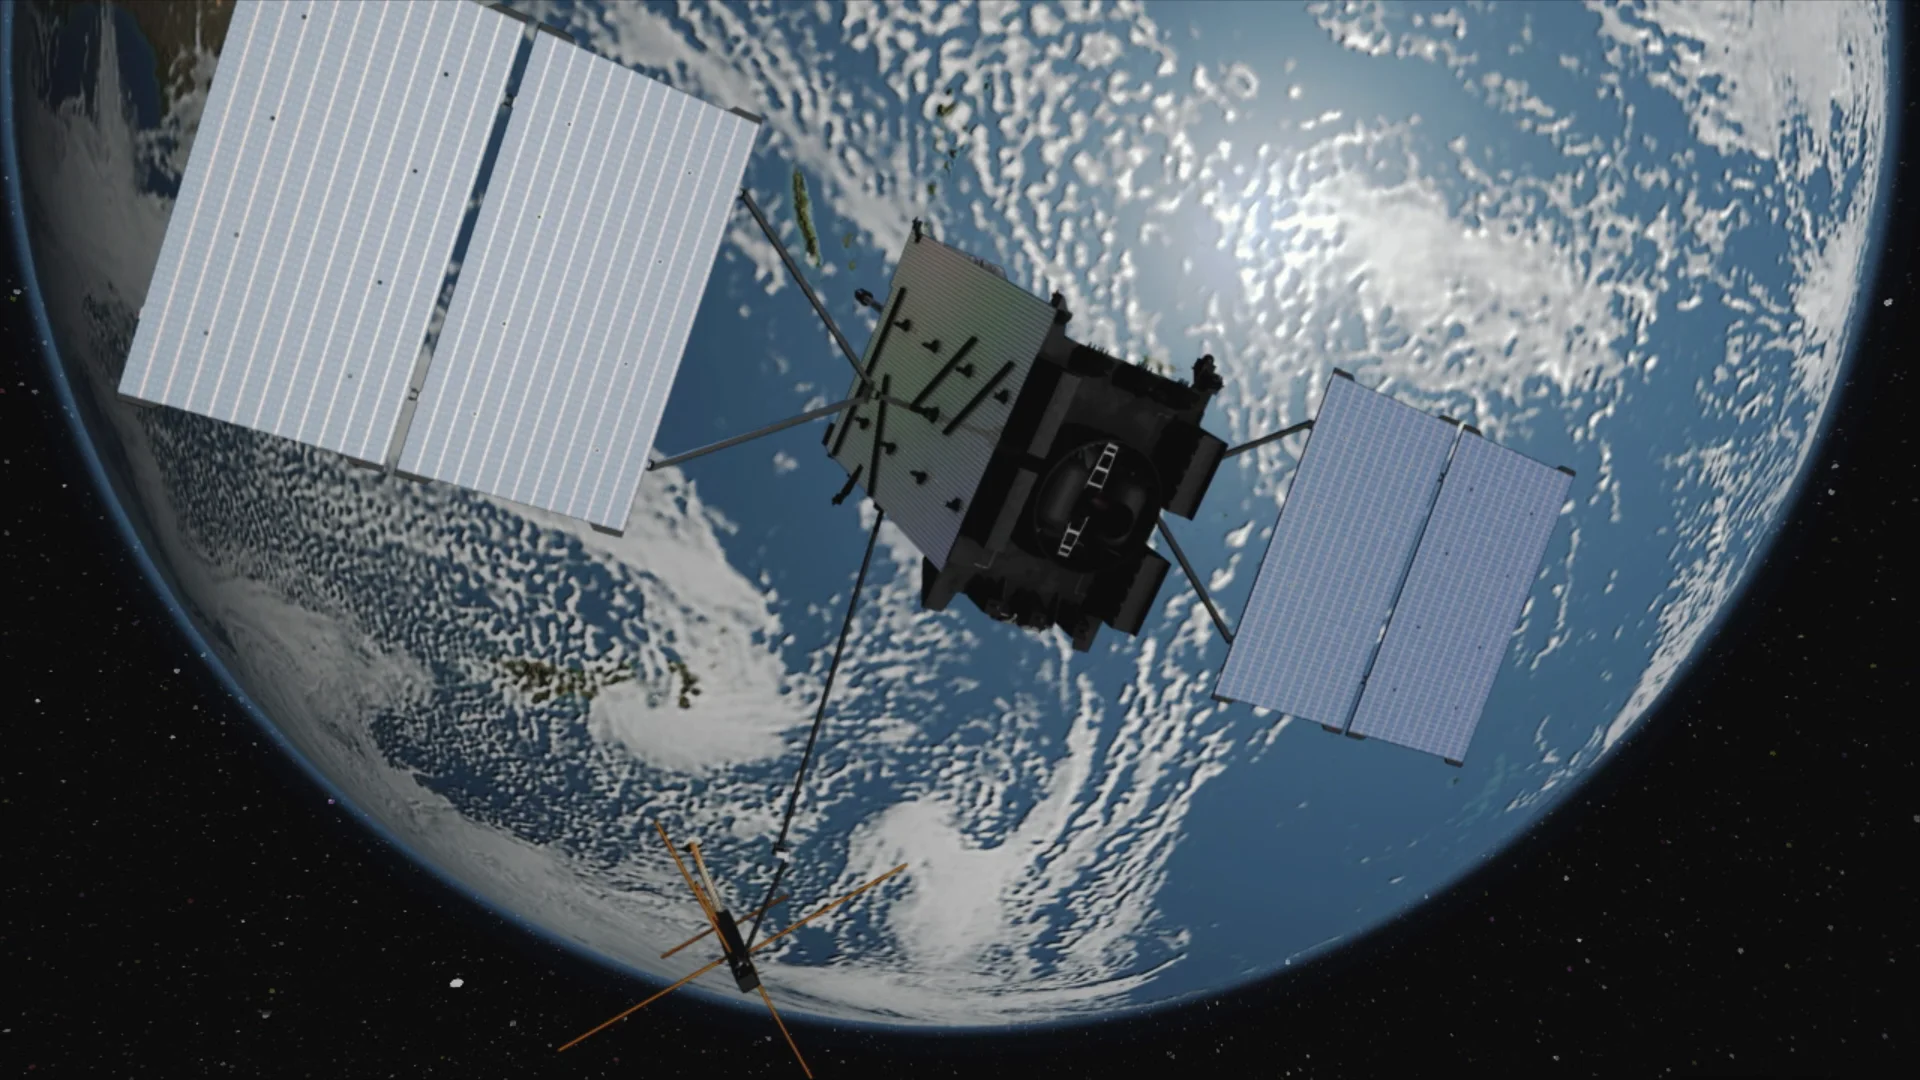 gps satellite in space